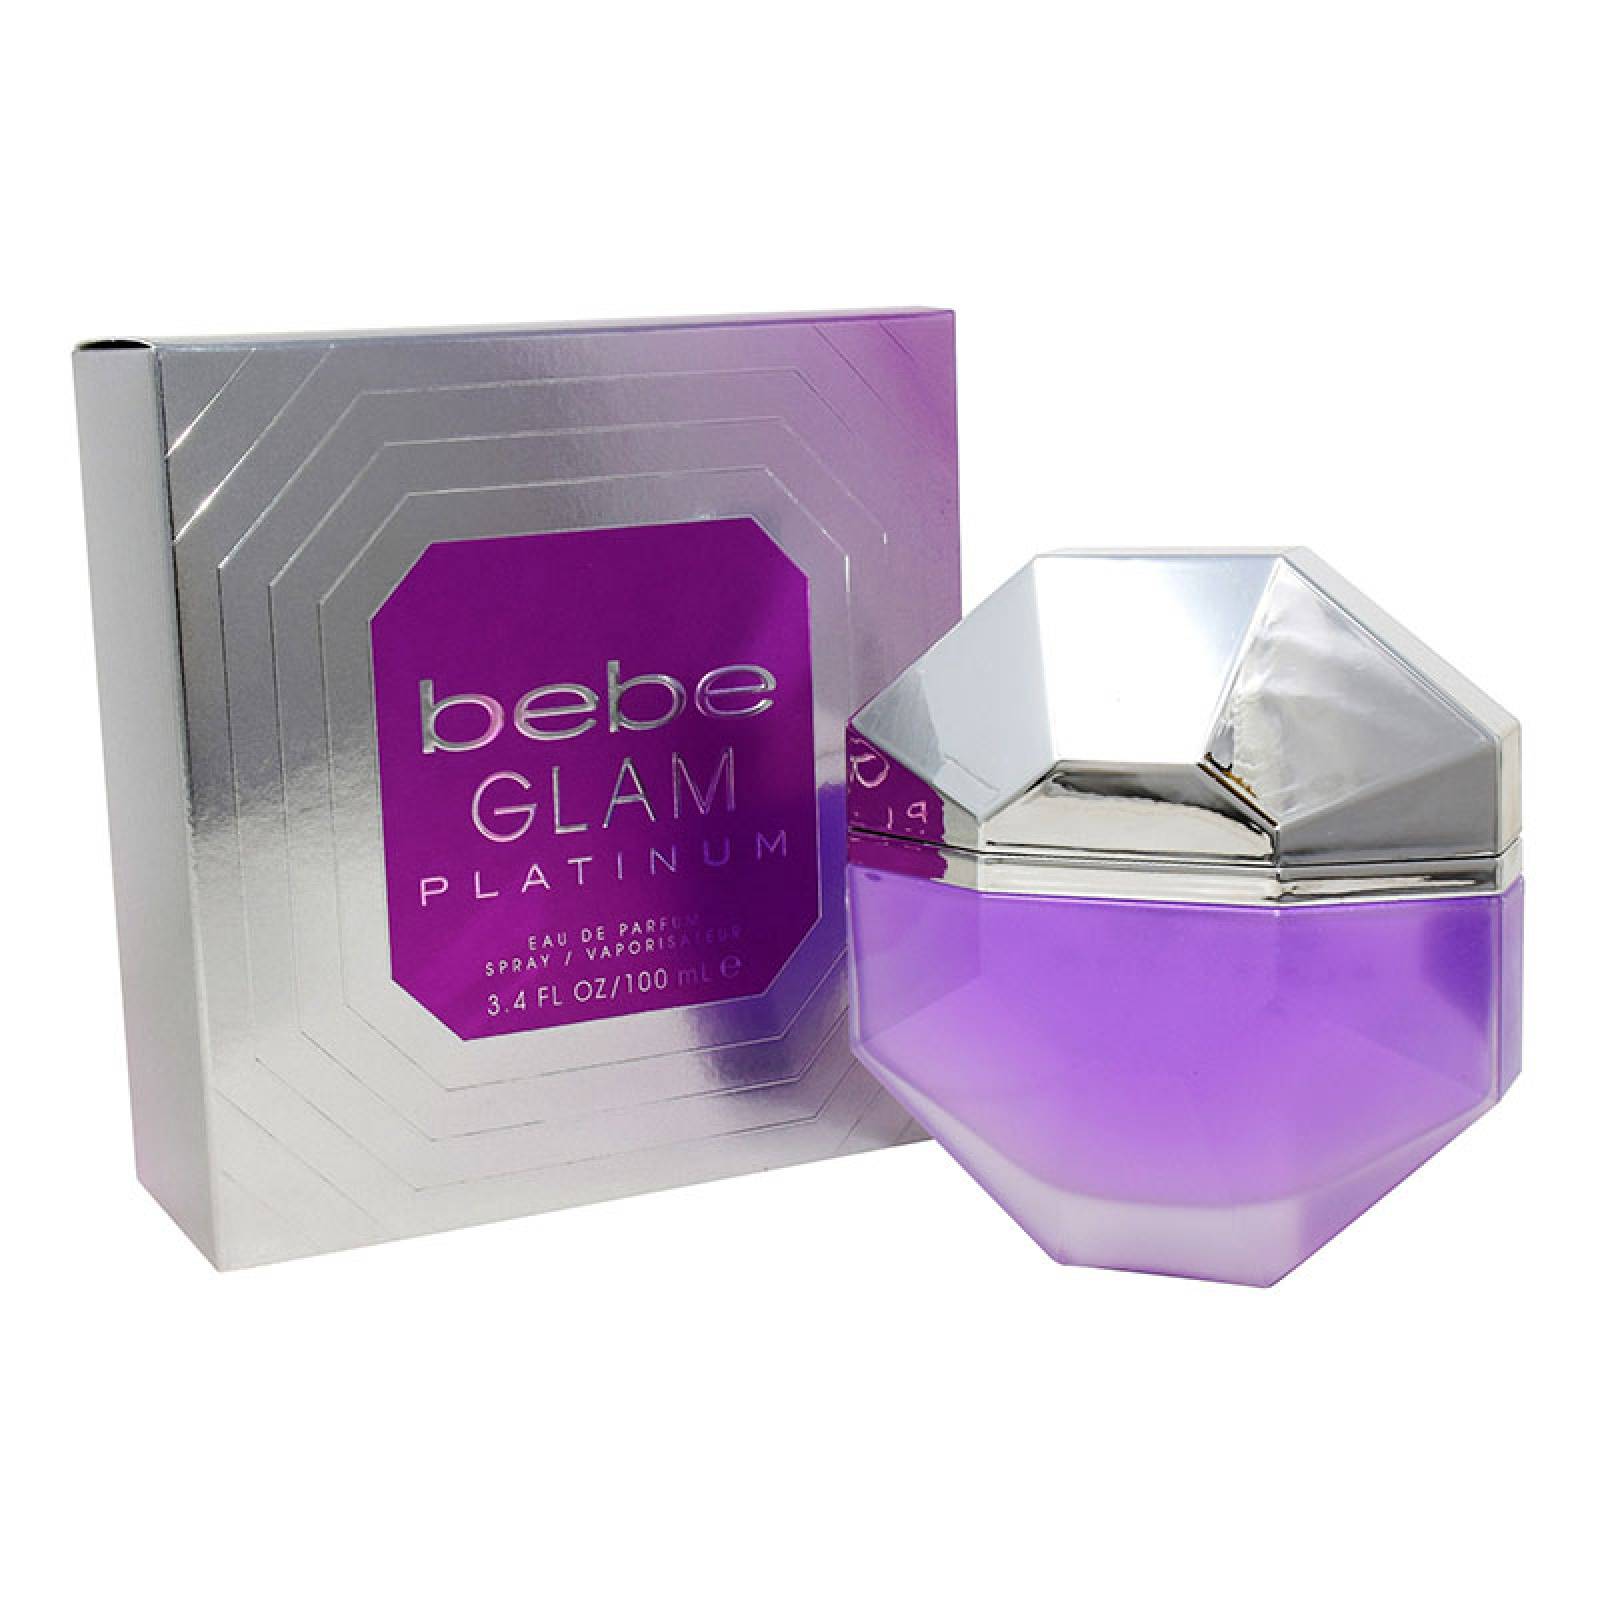 Bebe Glam Platinum 100 ml Edp Spray de Bebe